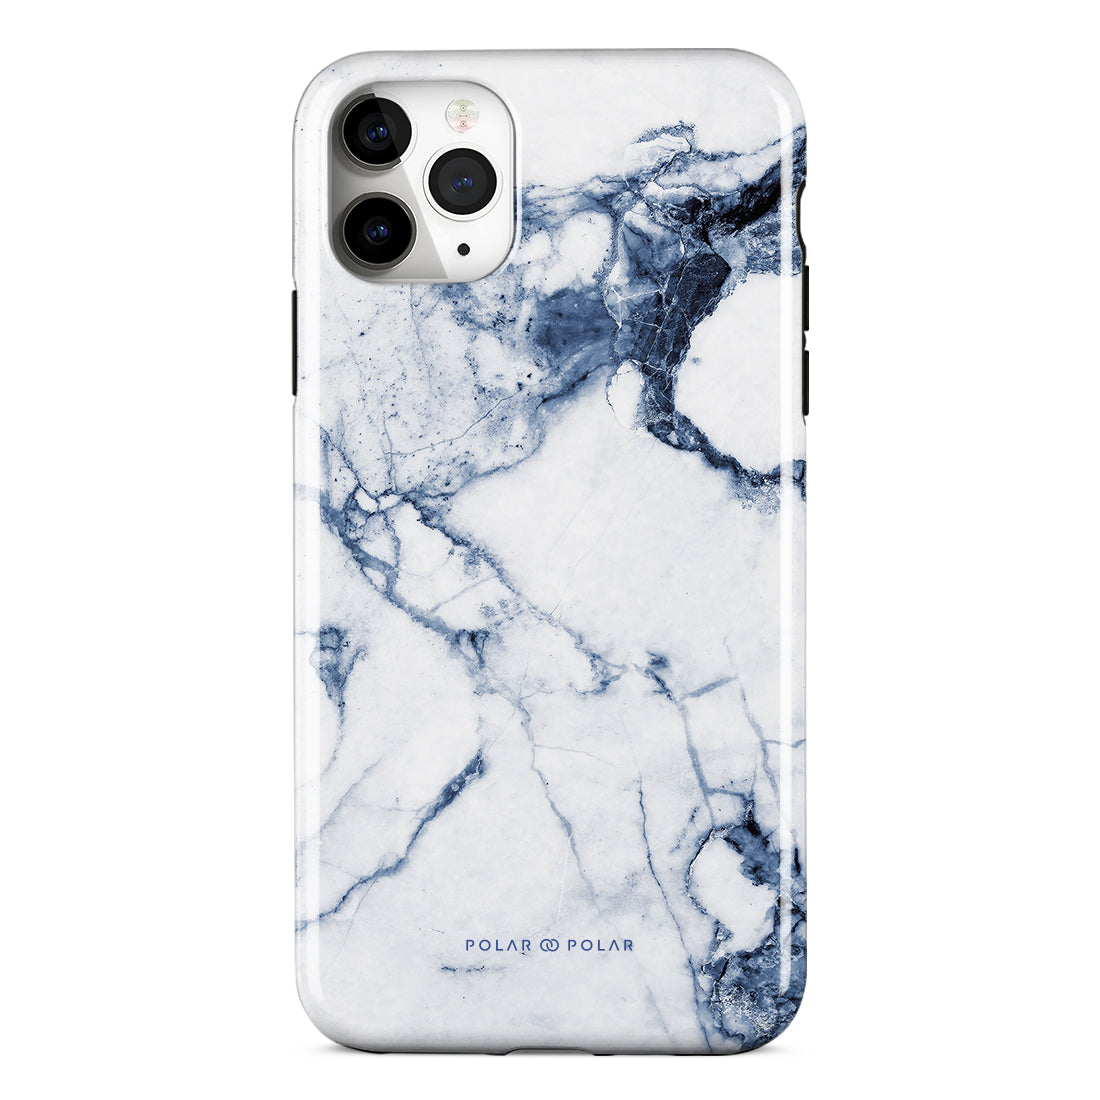 Standard_iPhone 11 Pro Max | Tough Case (dual-layer) Tough MagSafe Case | Common